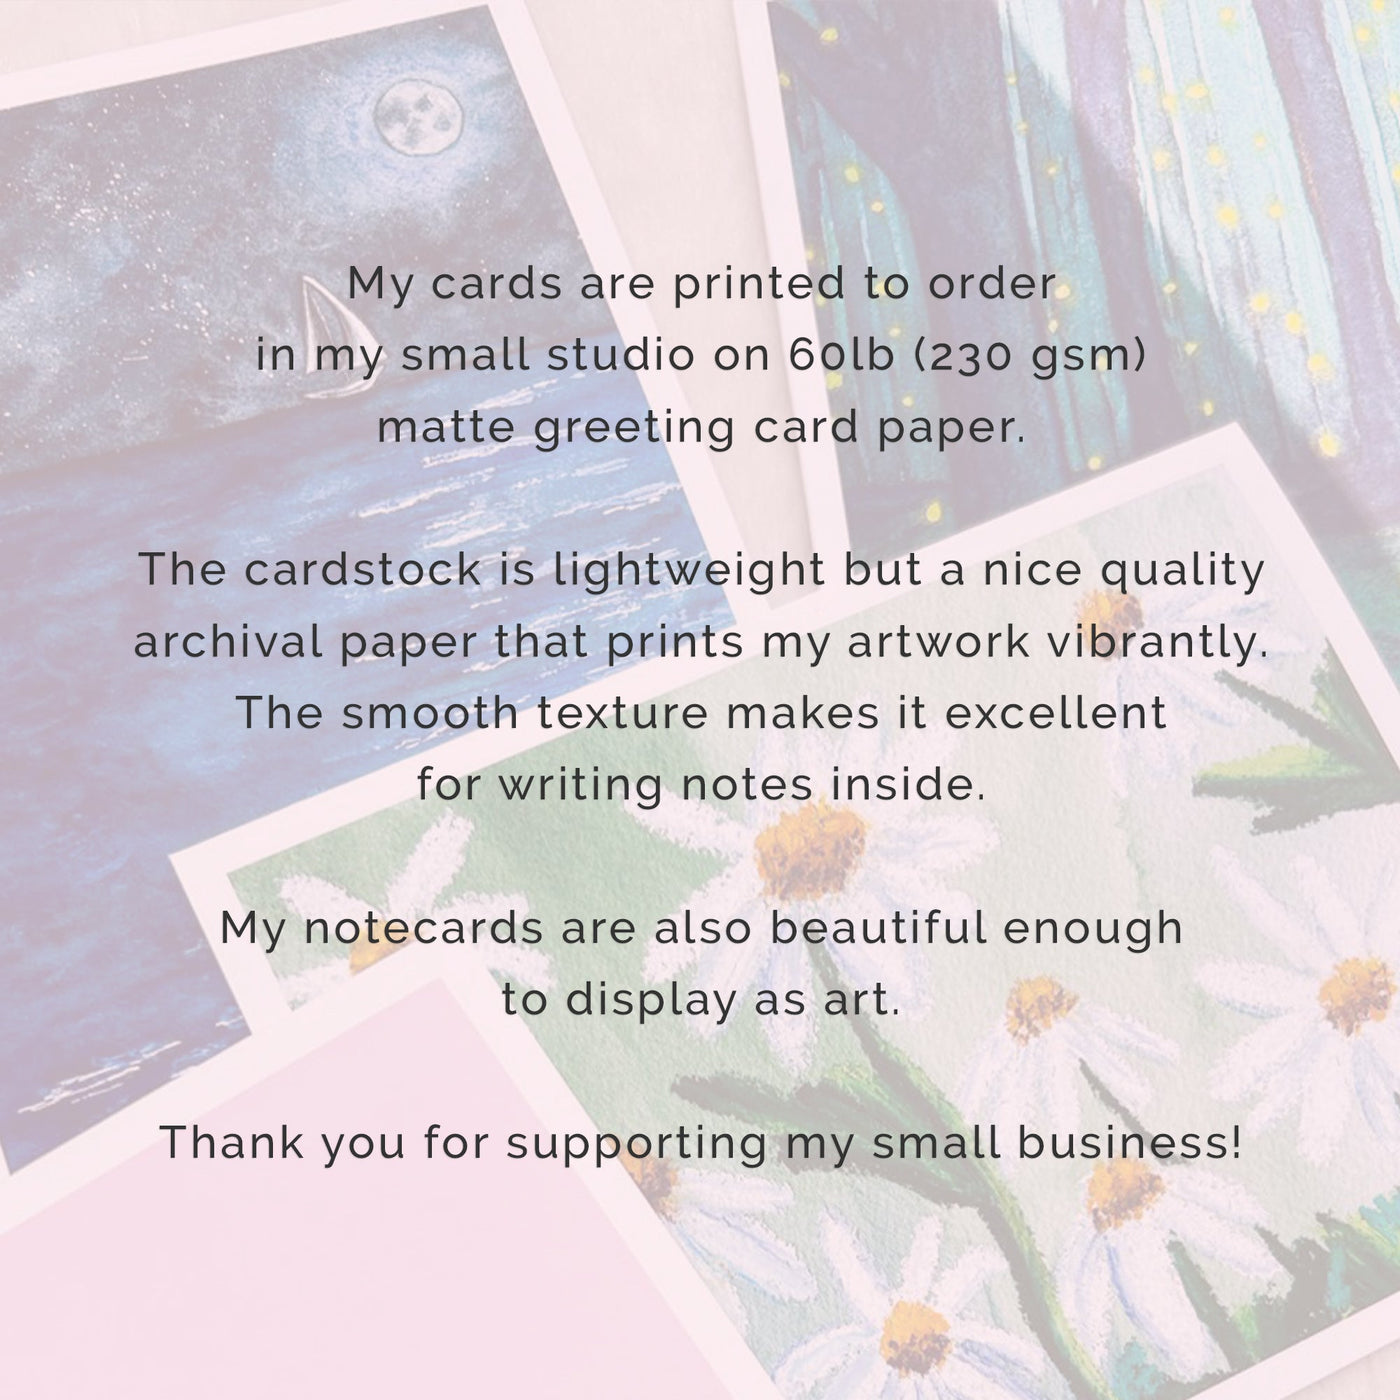 Pine Tree Greeting Card